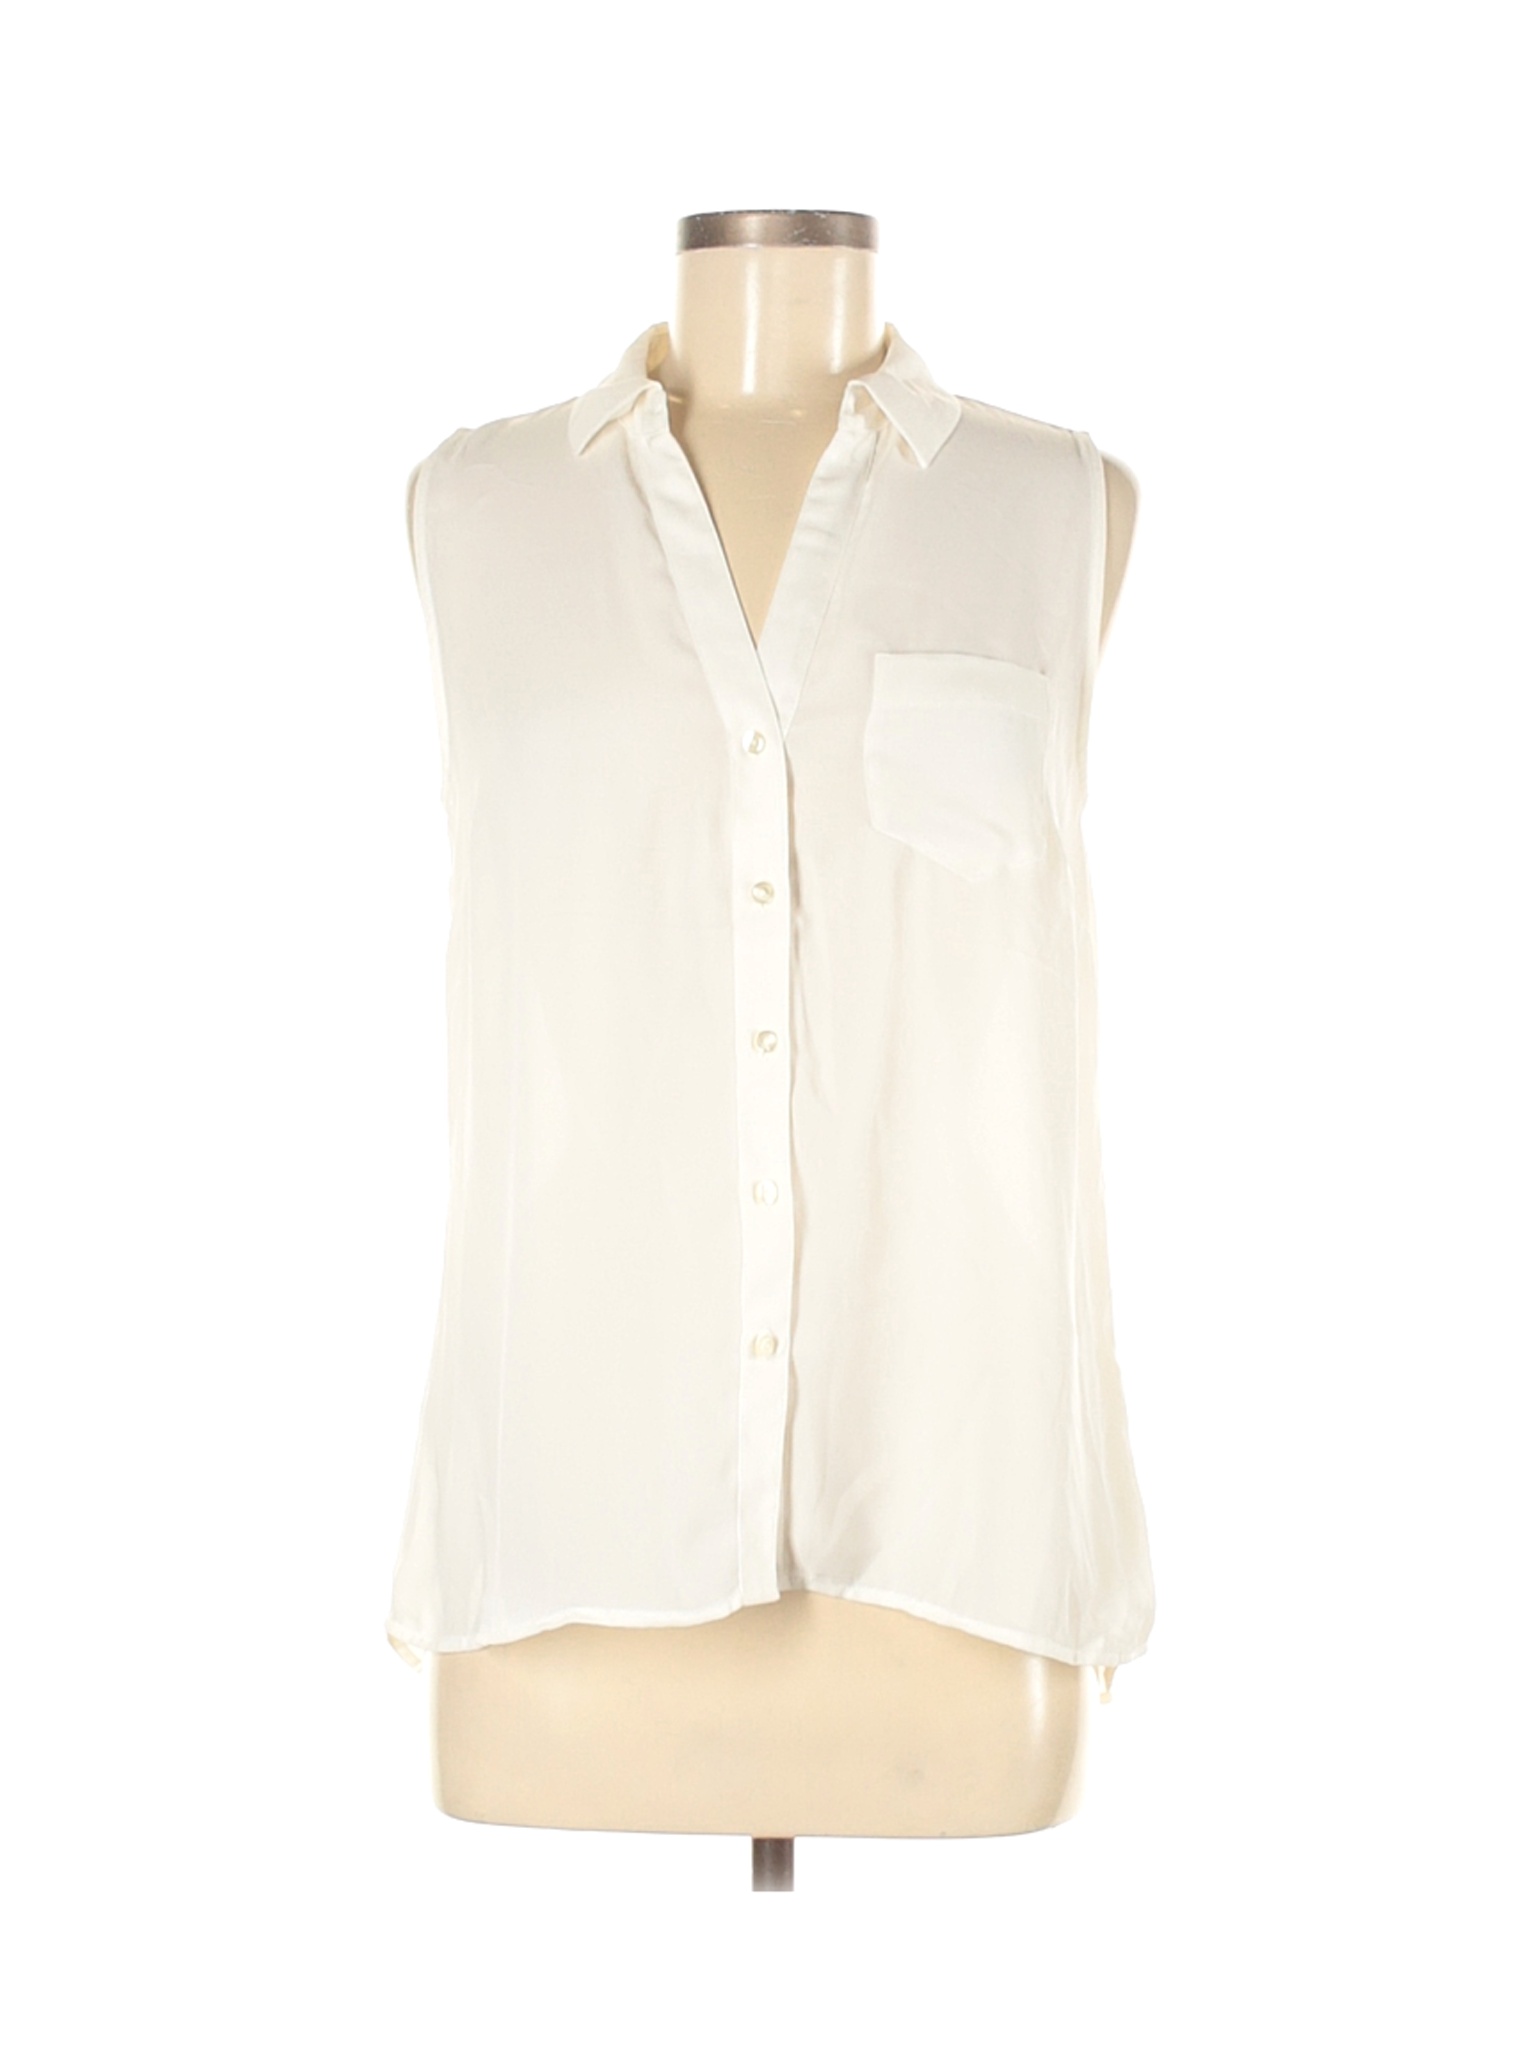 The Limited Women Ivory Short Sleeve Blouse M | eBay